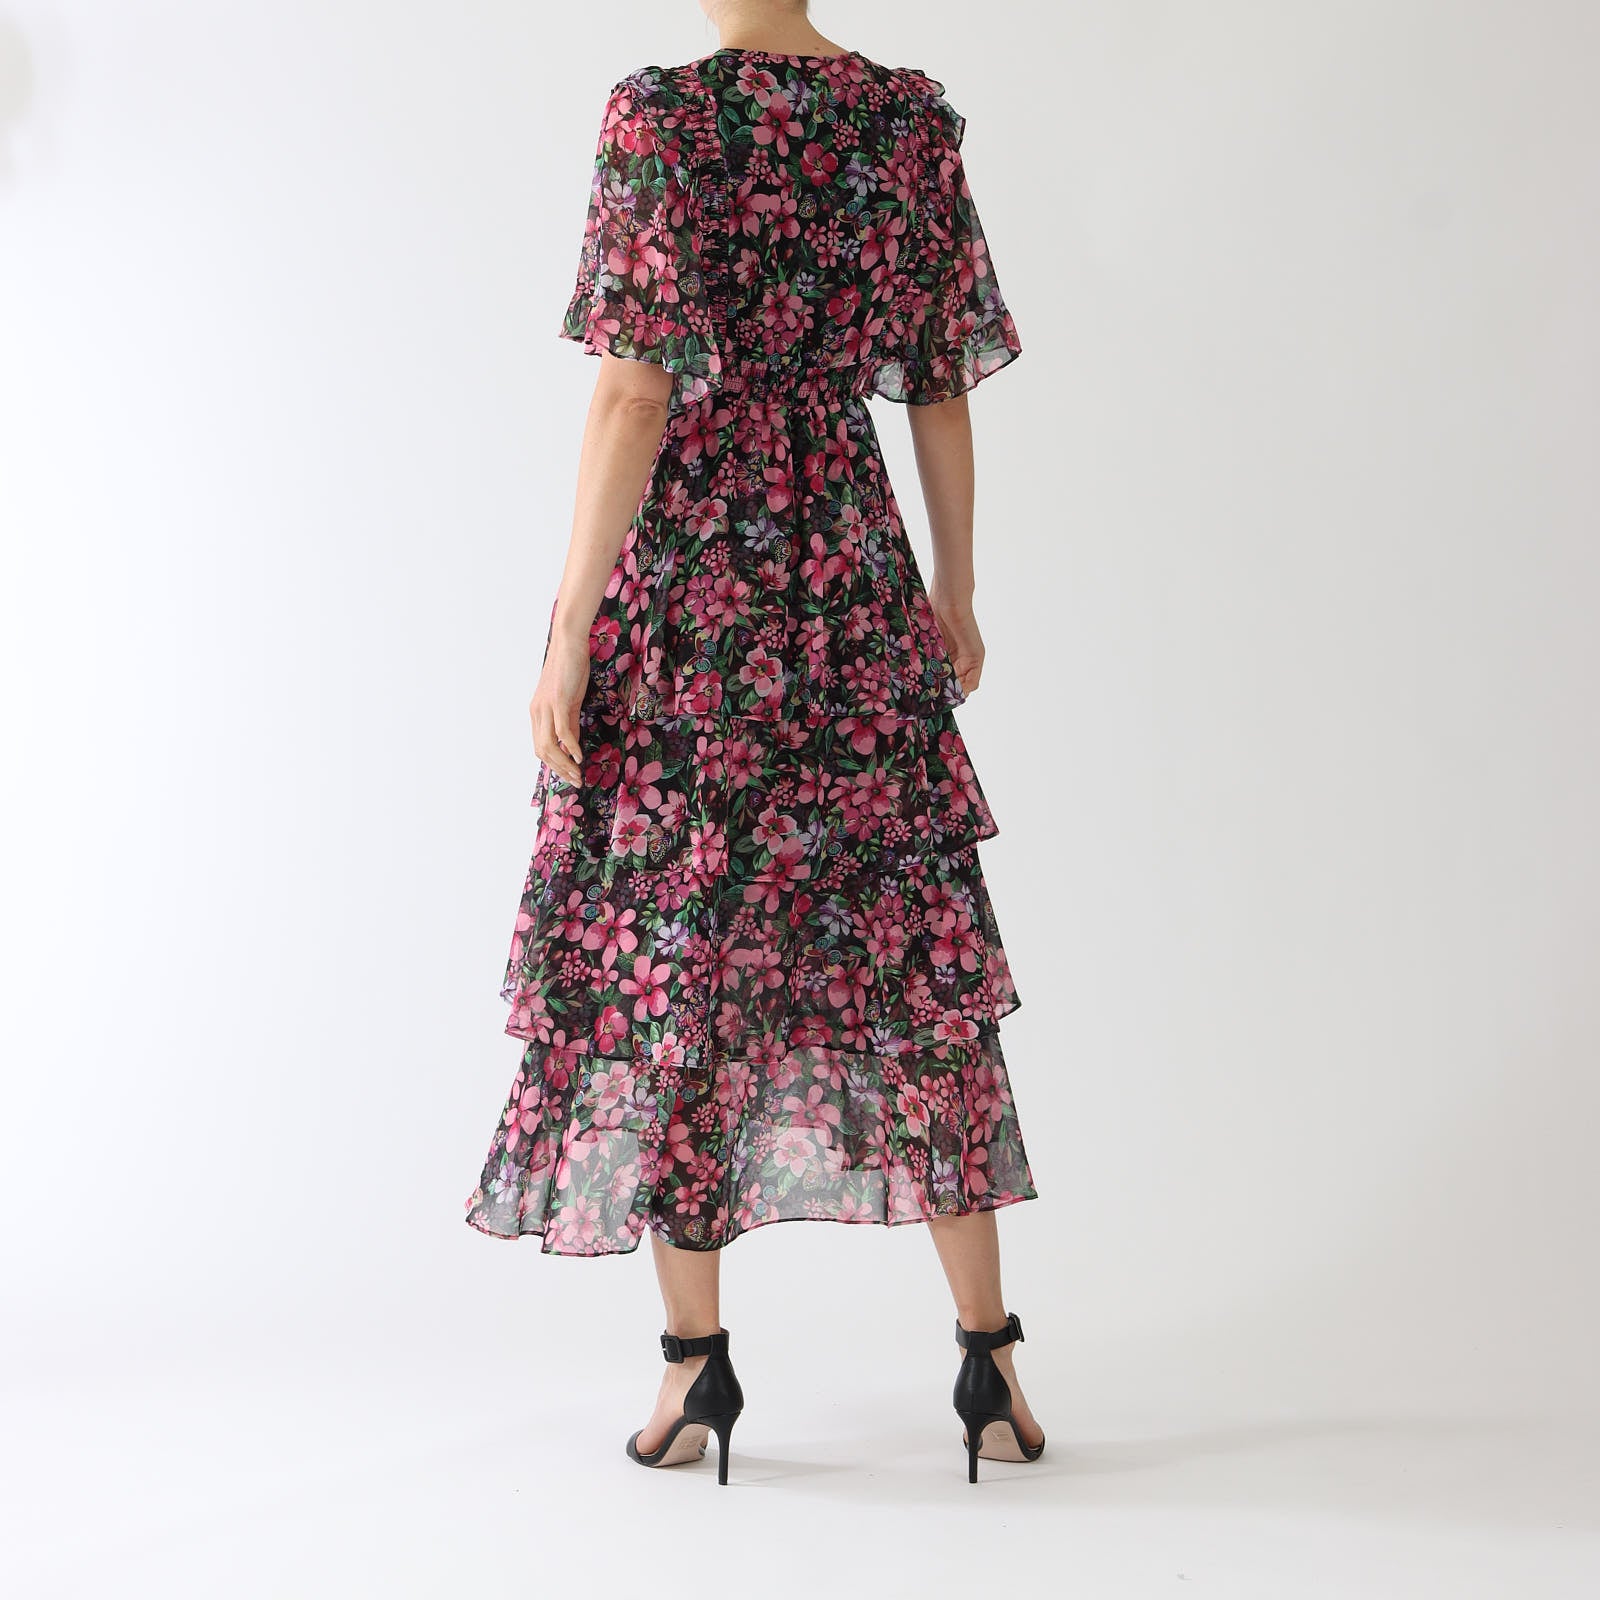 Natasha Black Floral Print Tiered Midi Dress